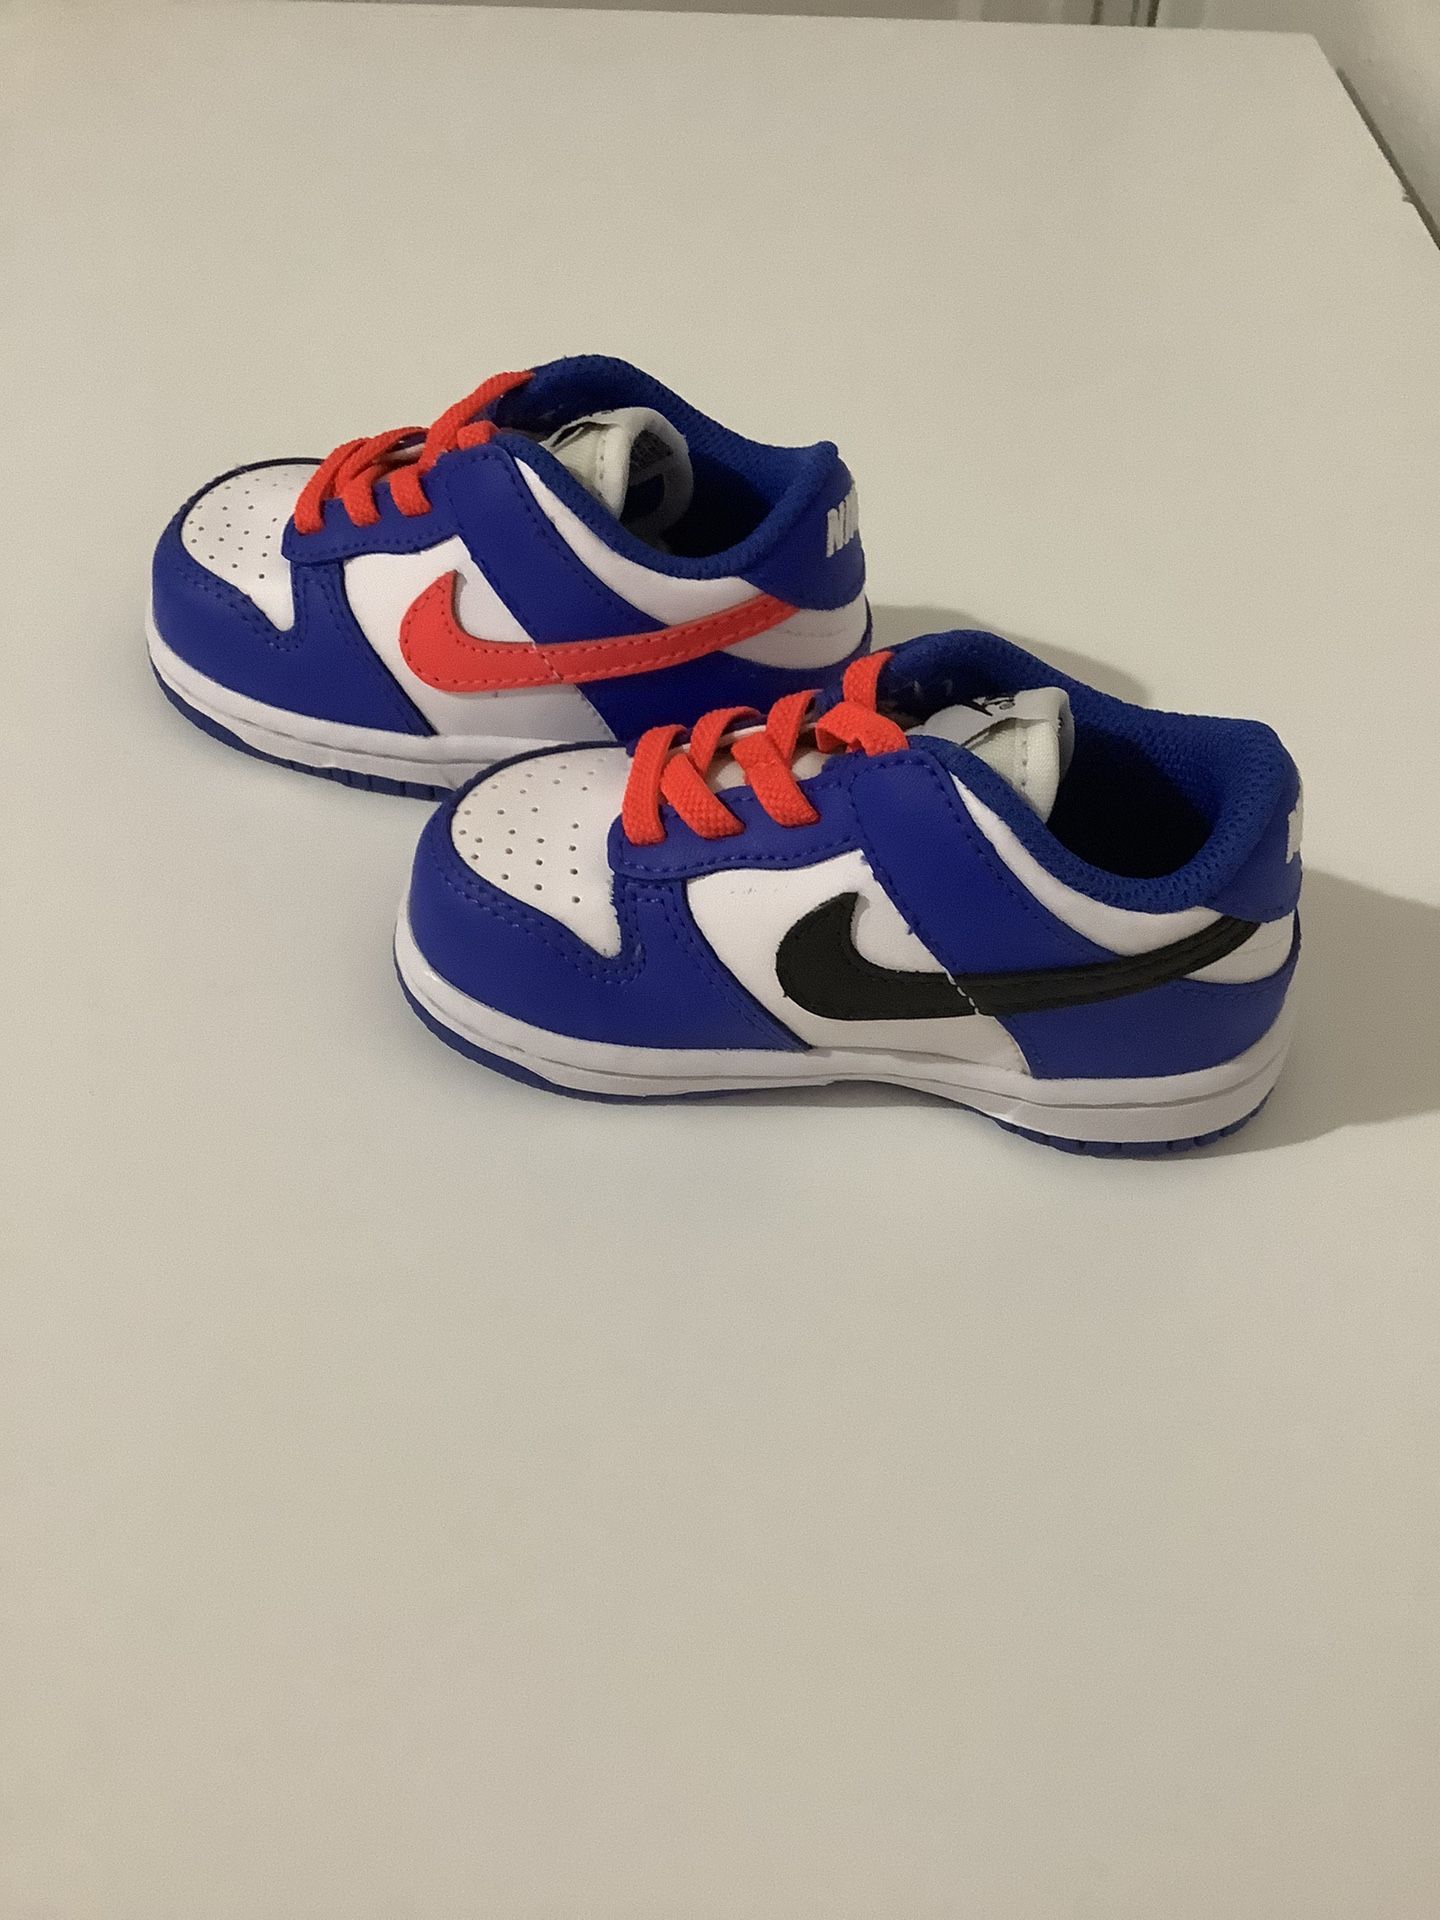 Toddler Nike Shoes Size US 6C 